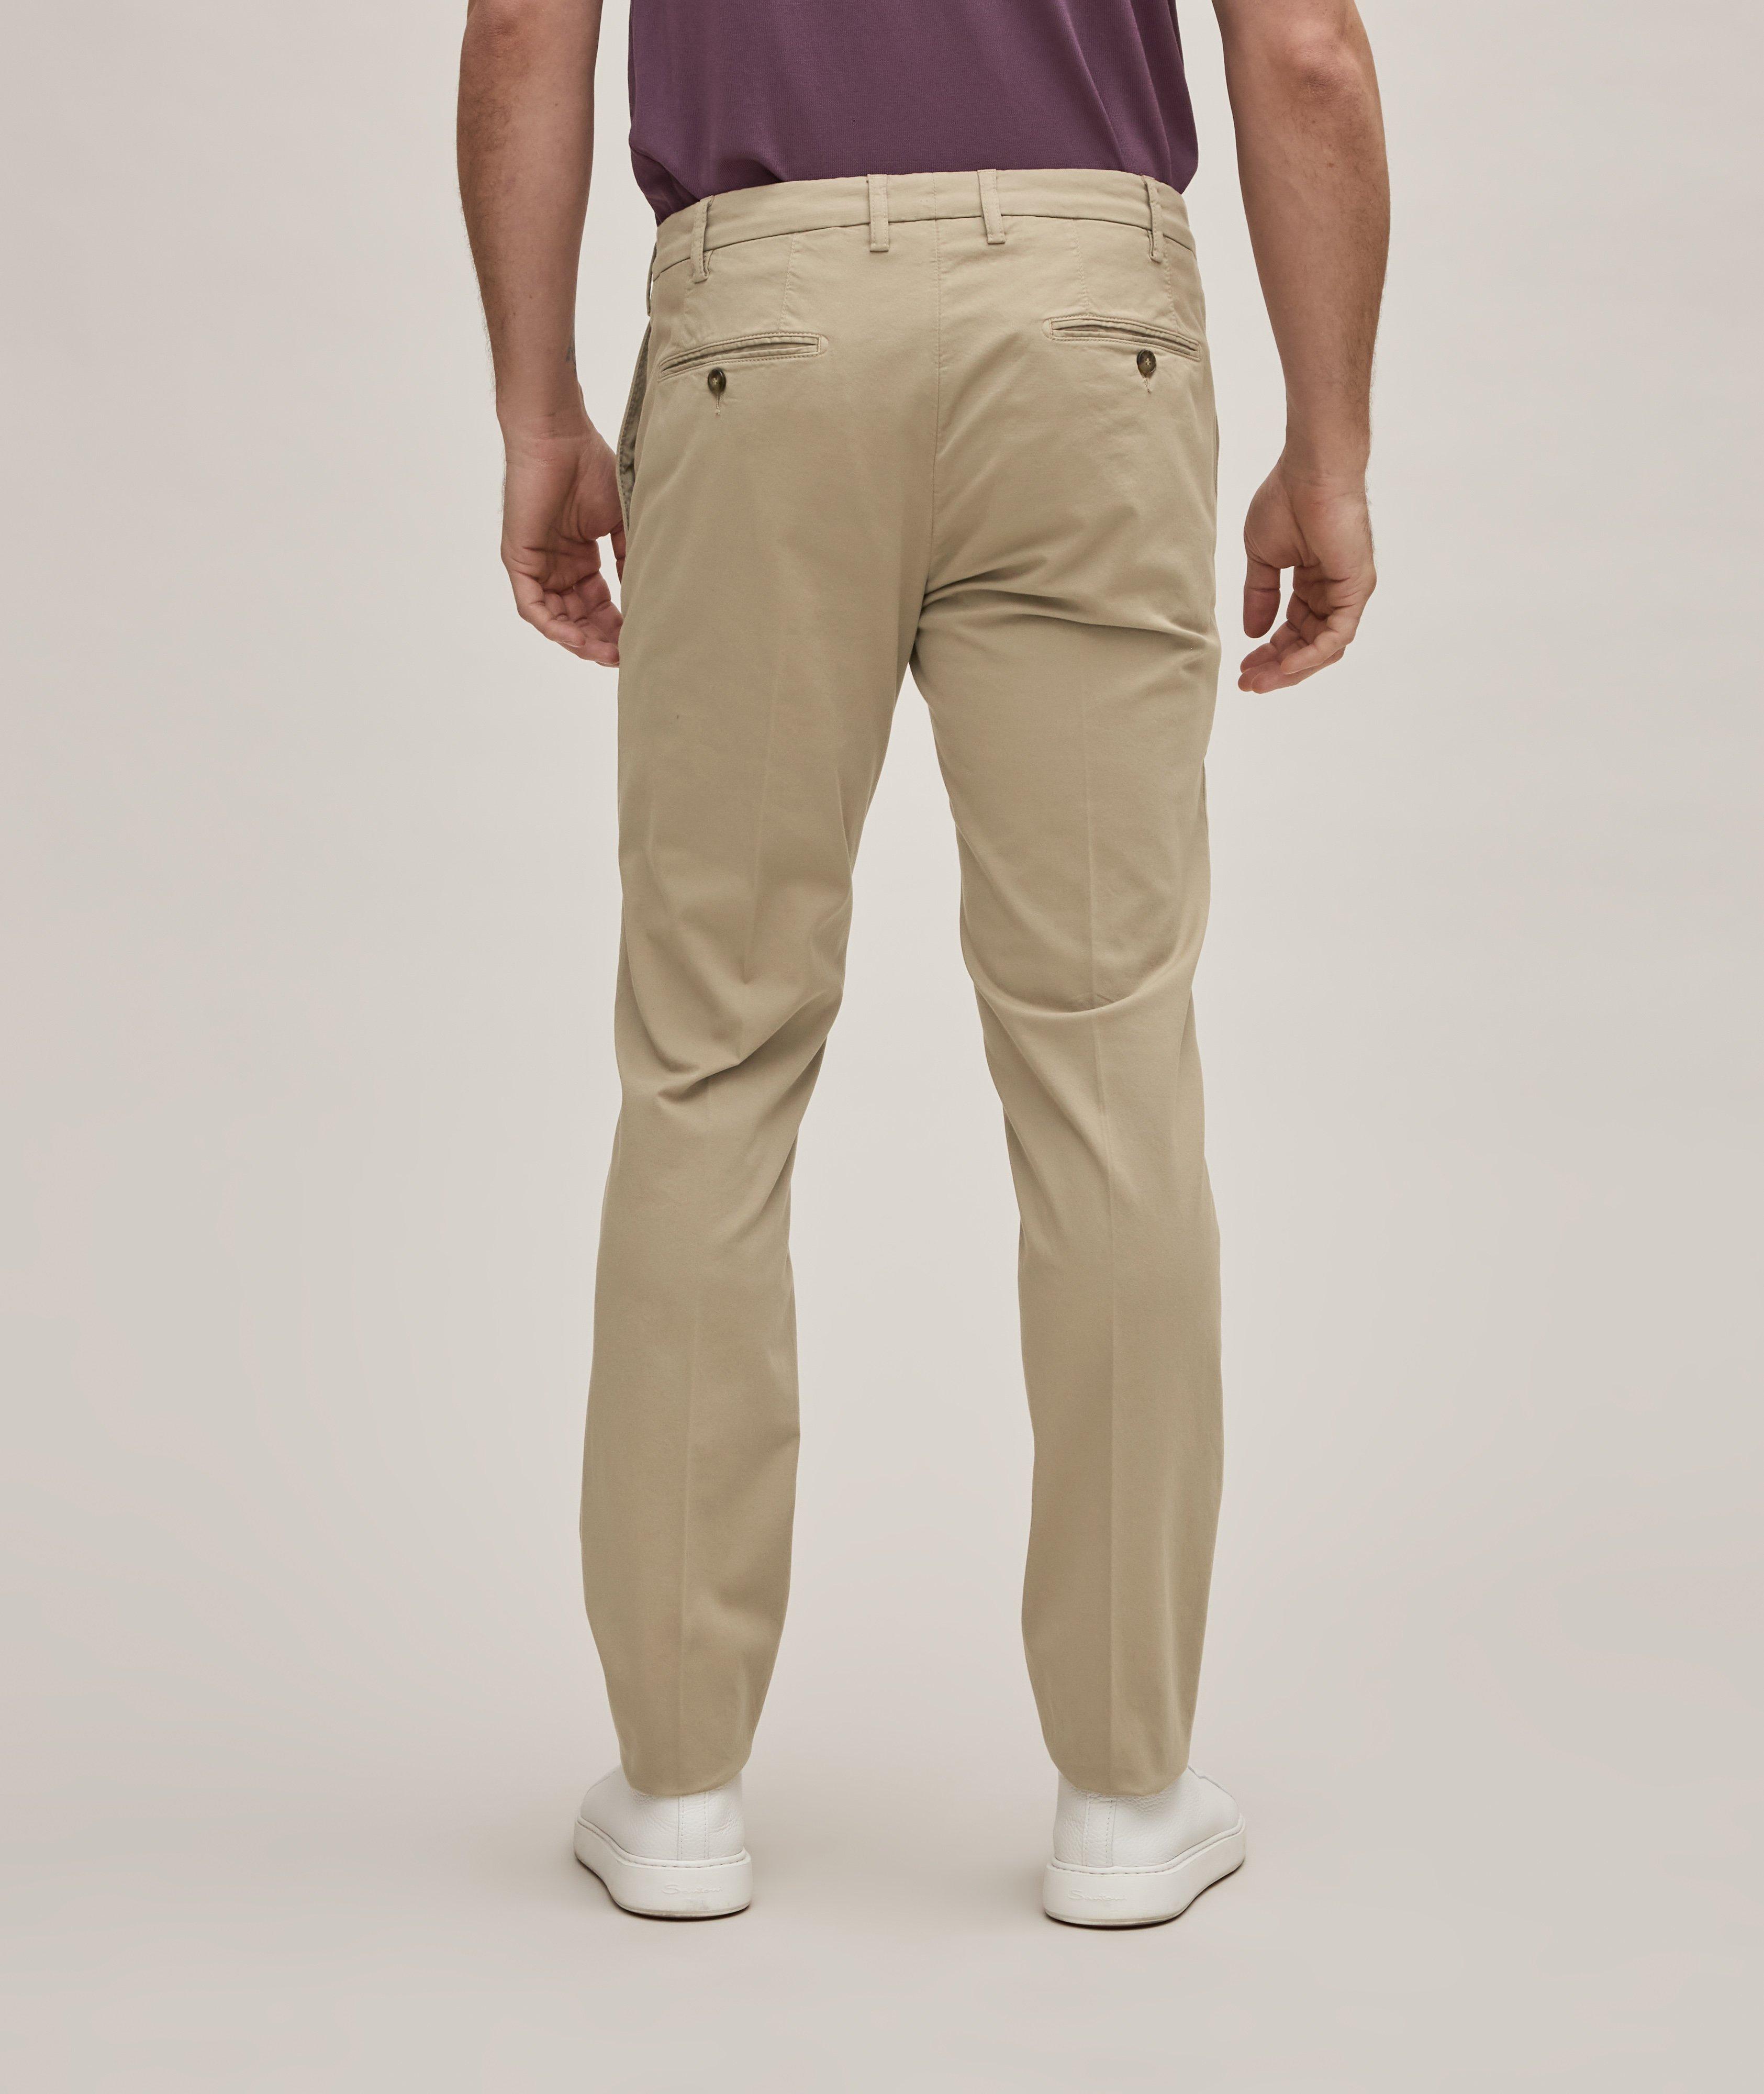 Micro Twill Stretch-Cotton Pants image 3